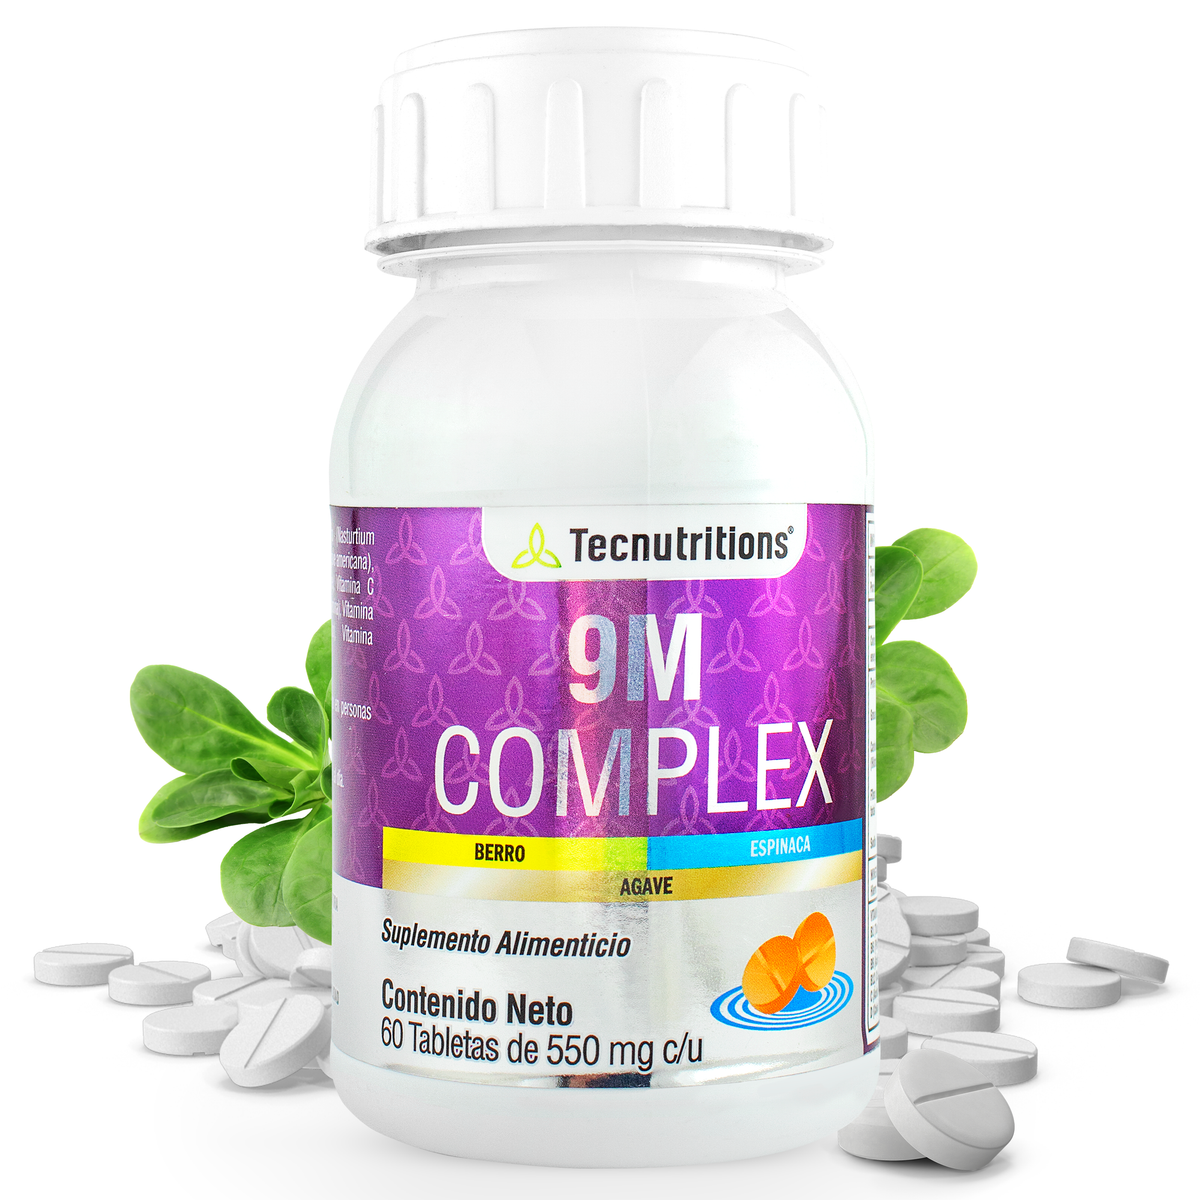 Food supplement with amino acids, vitamins and minerals, 9M Complex, 60 tabl